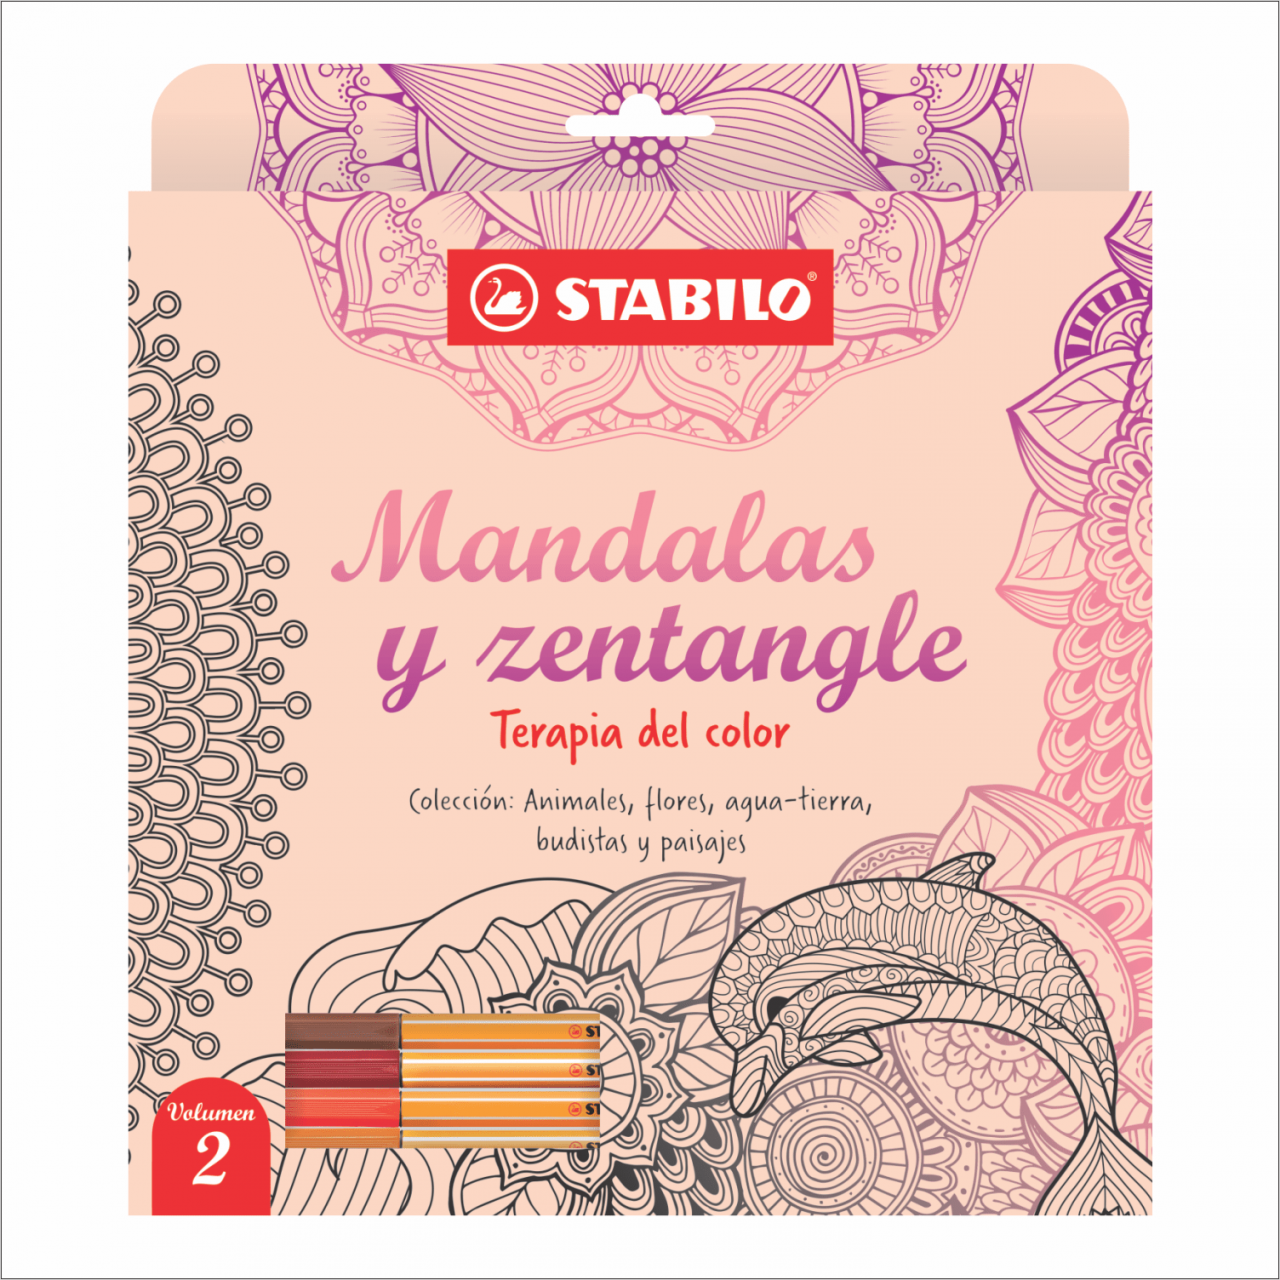 LIBRO DE MANDALAS Y ZENTANGLE STABILO VOLUMEN 2 + 5 FINE PEN STABILO POINT 88